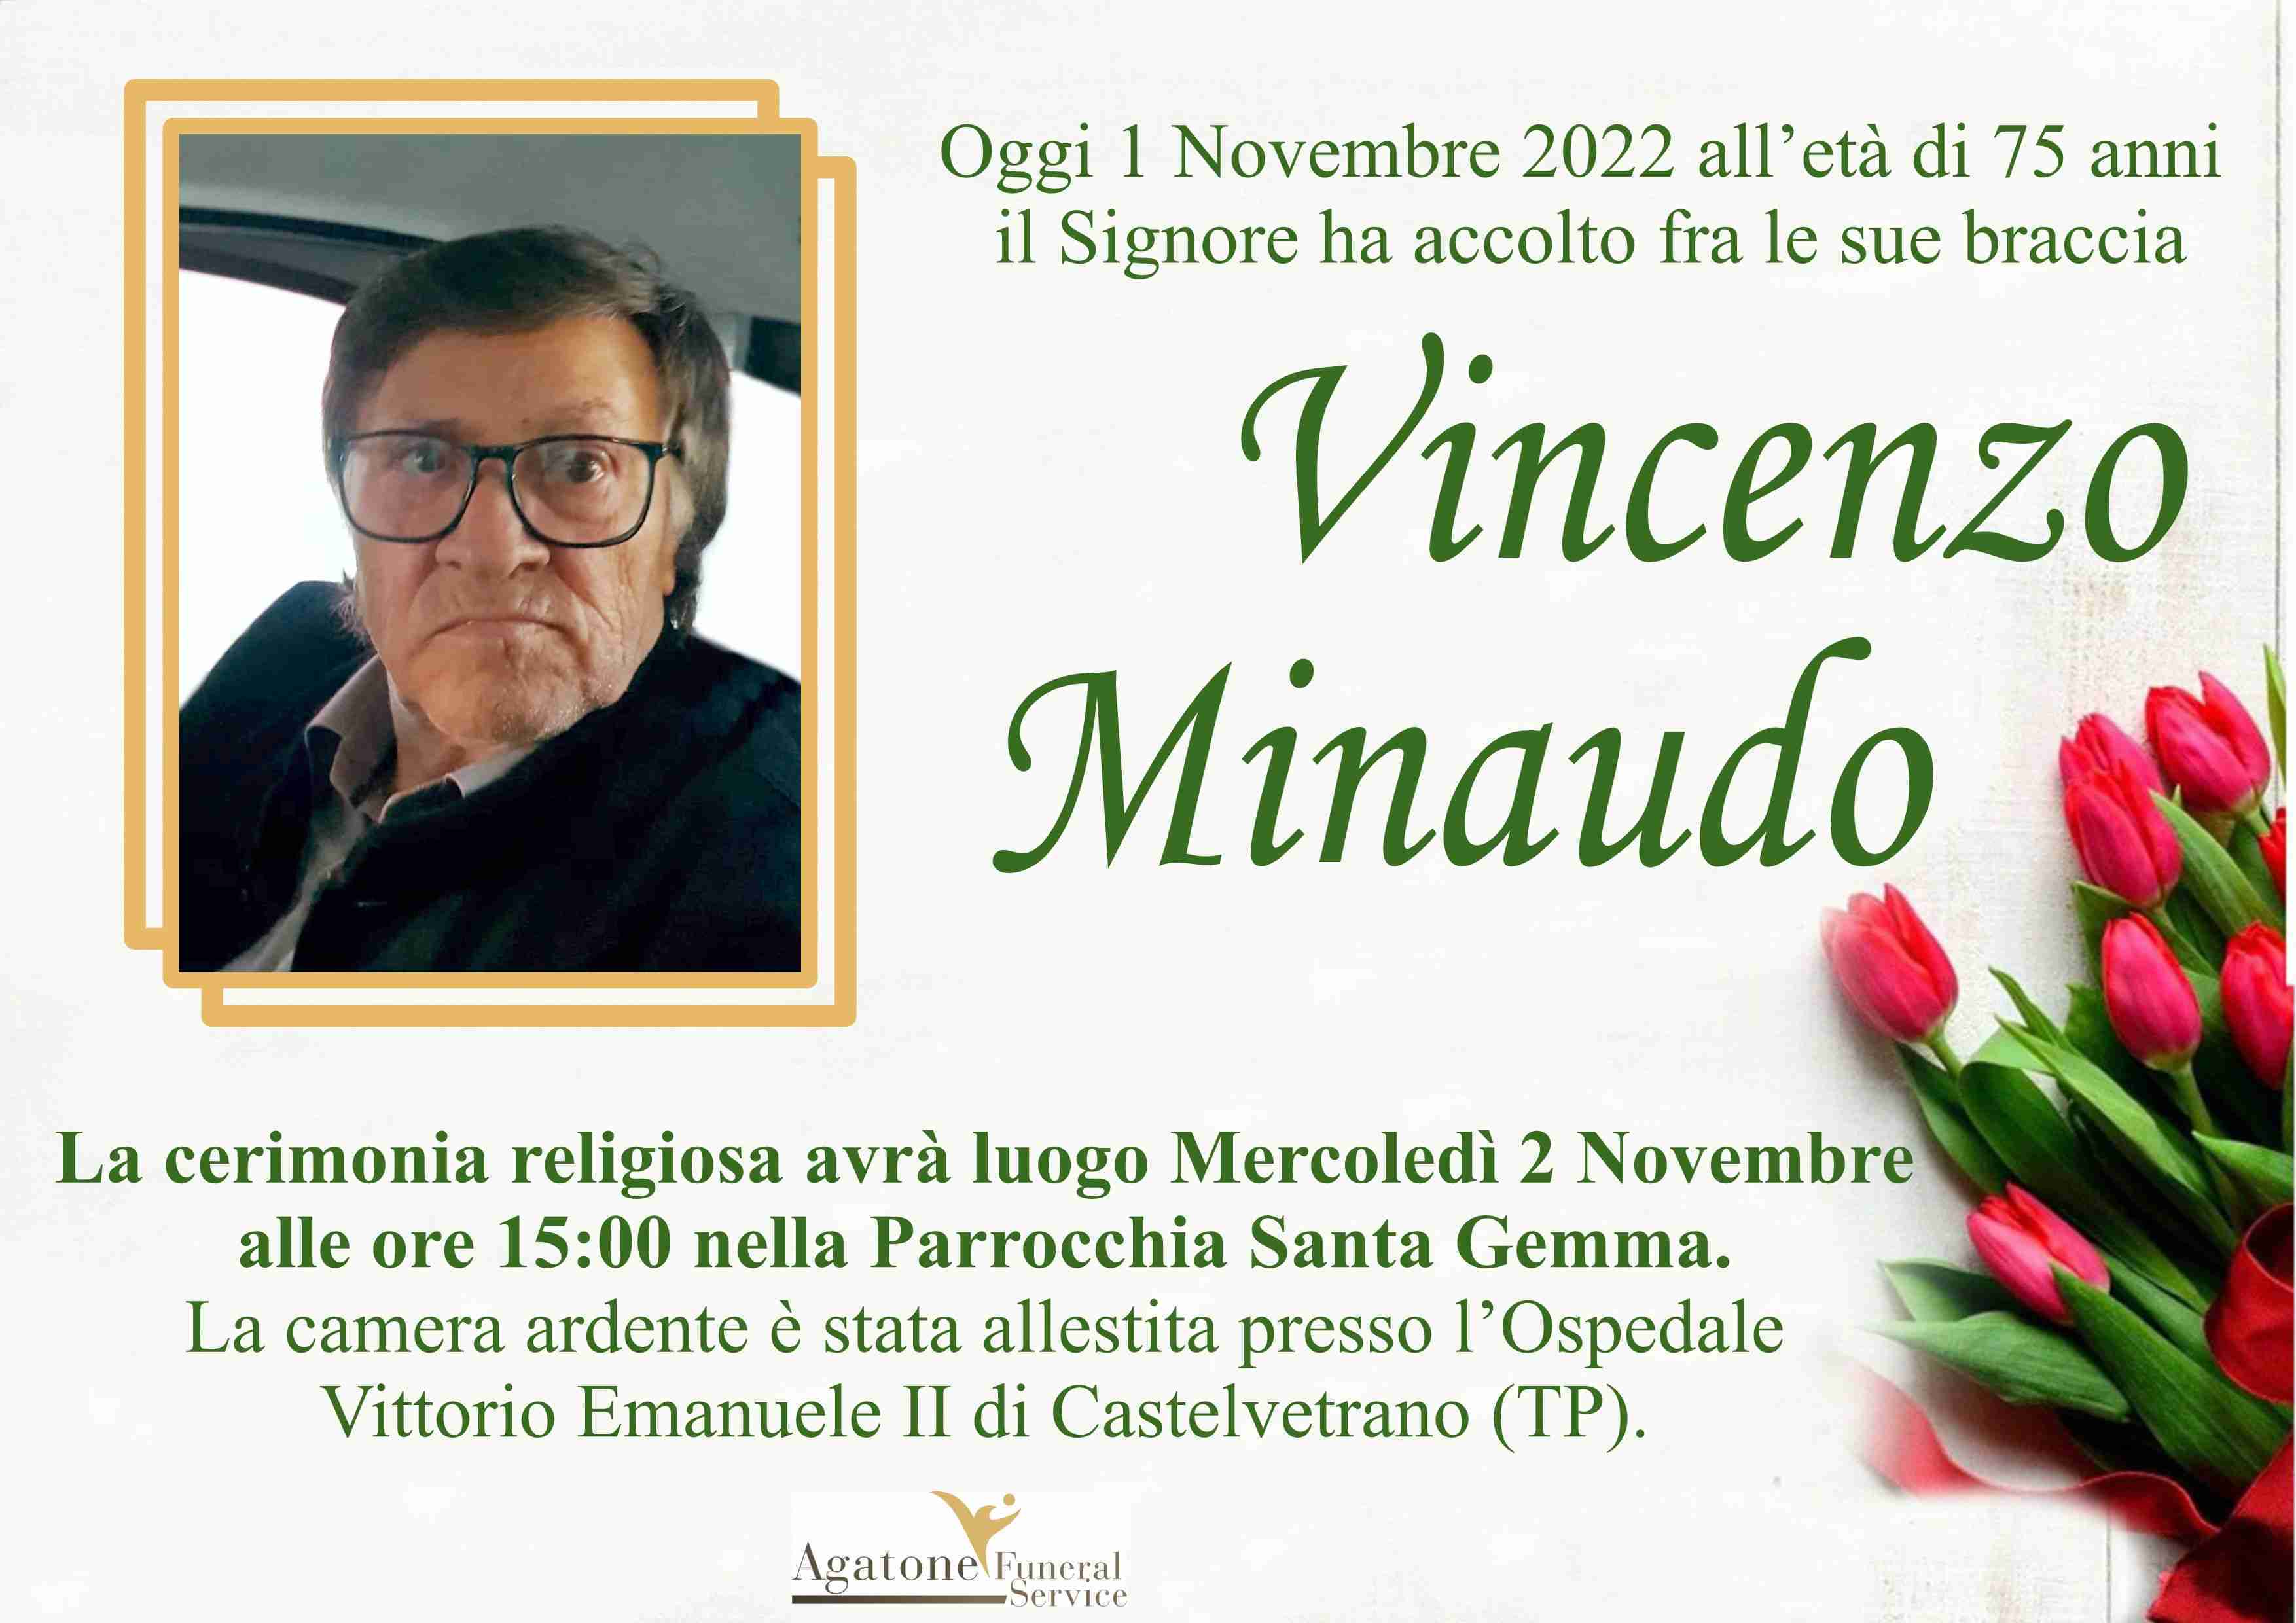 Vincenzo Minaudo